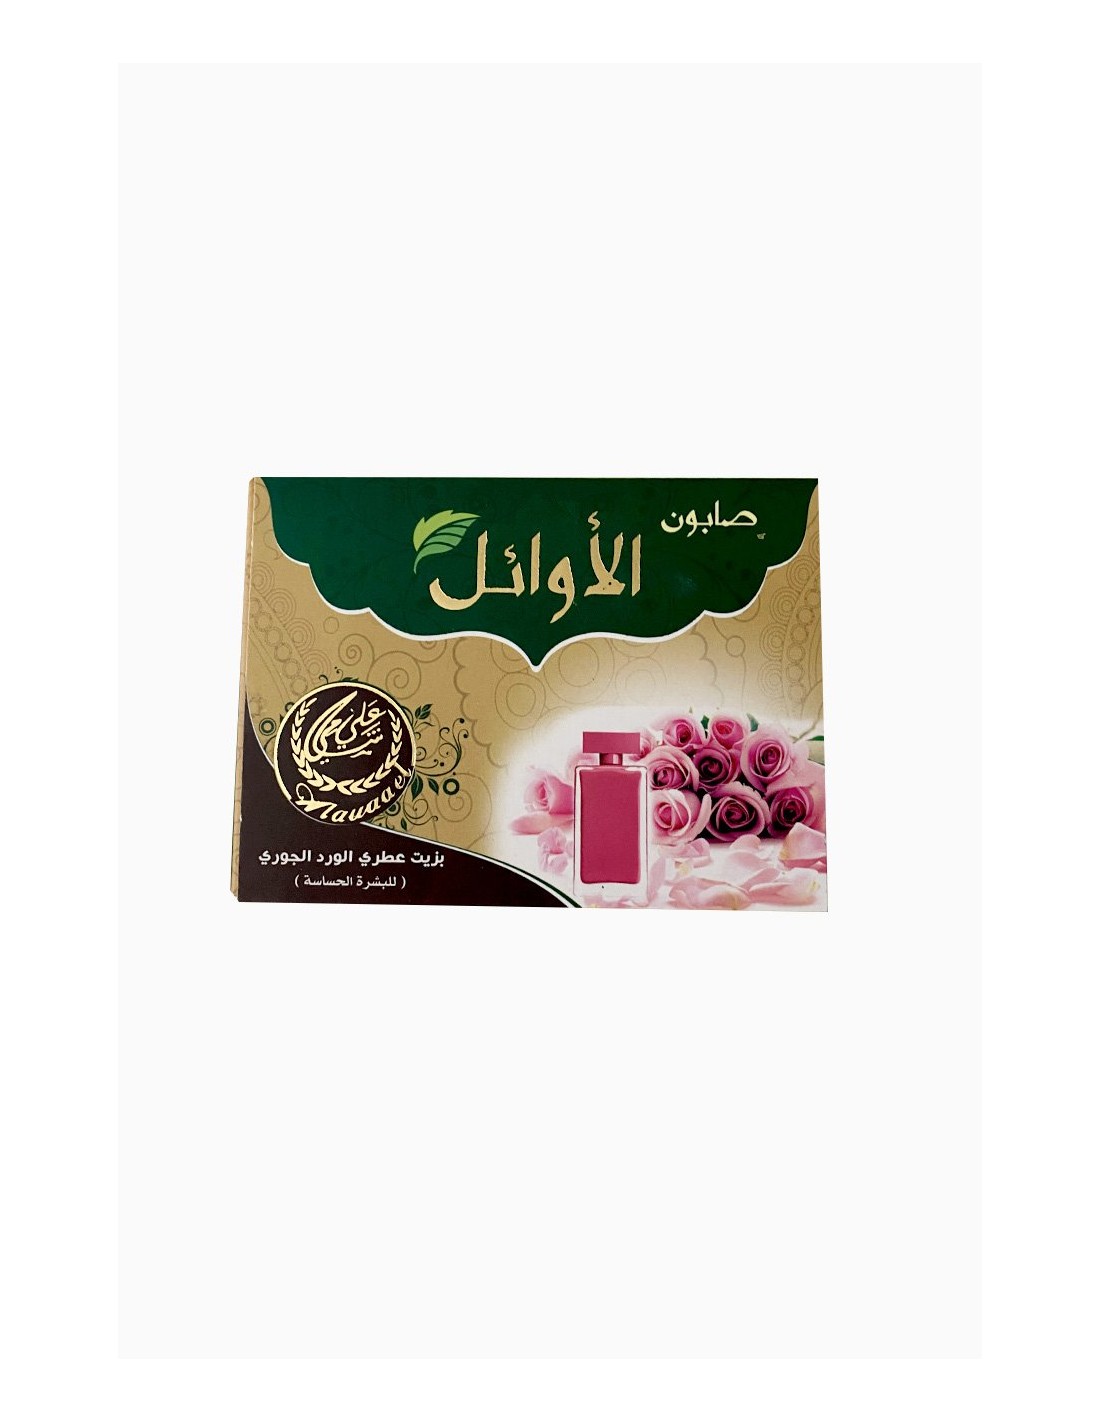 Aleppo soap with rose oil